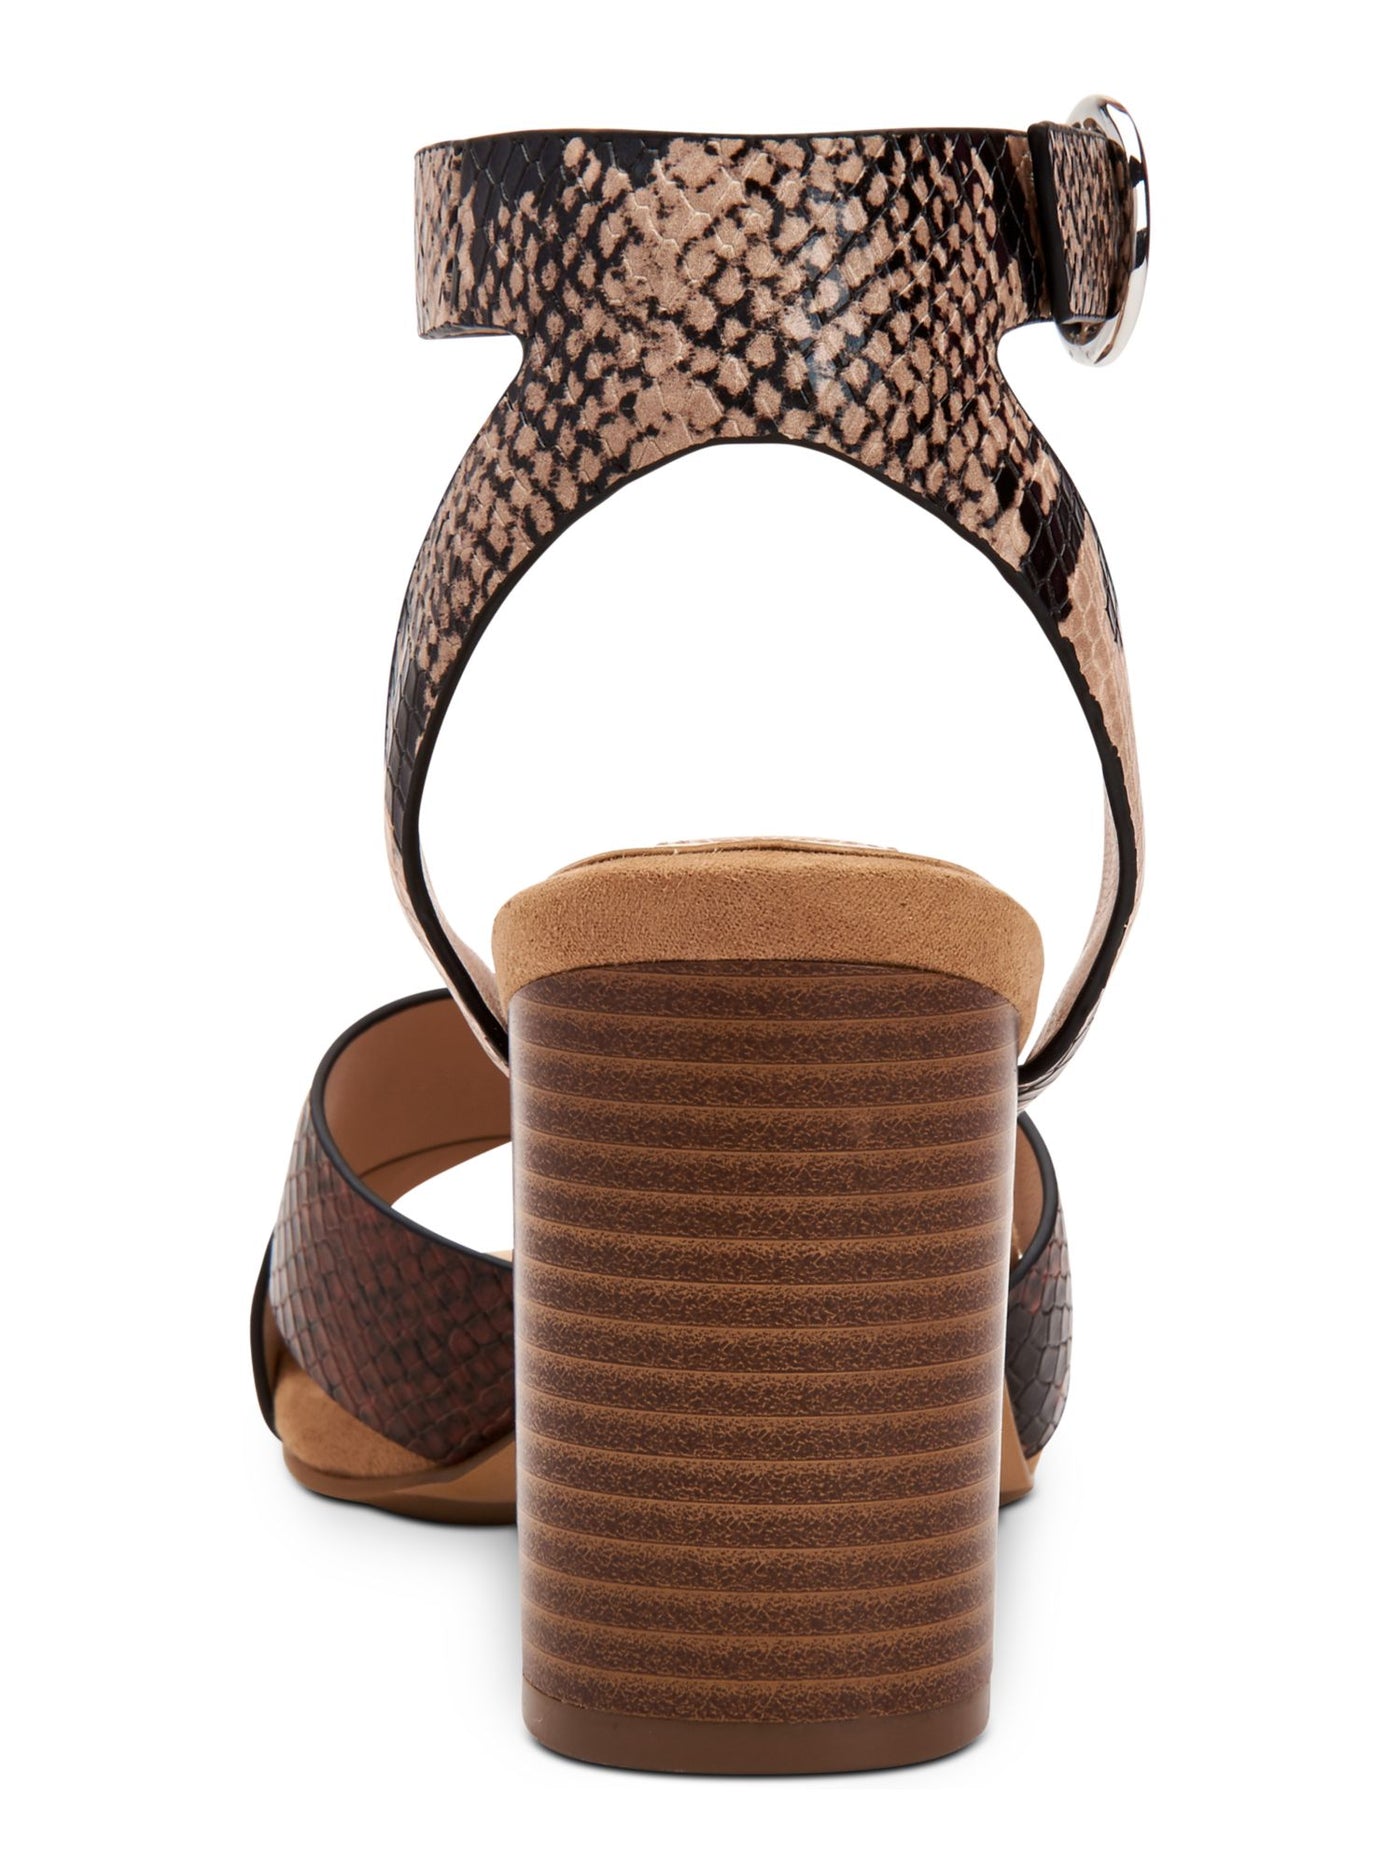 ALFANI Womens Brown Snakeskin Adjustable Comfort Cushioned Ankle Strap Irinna Square Toe Block Heel Buckle Dress Sandals 8.5 M